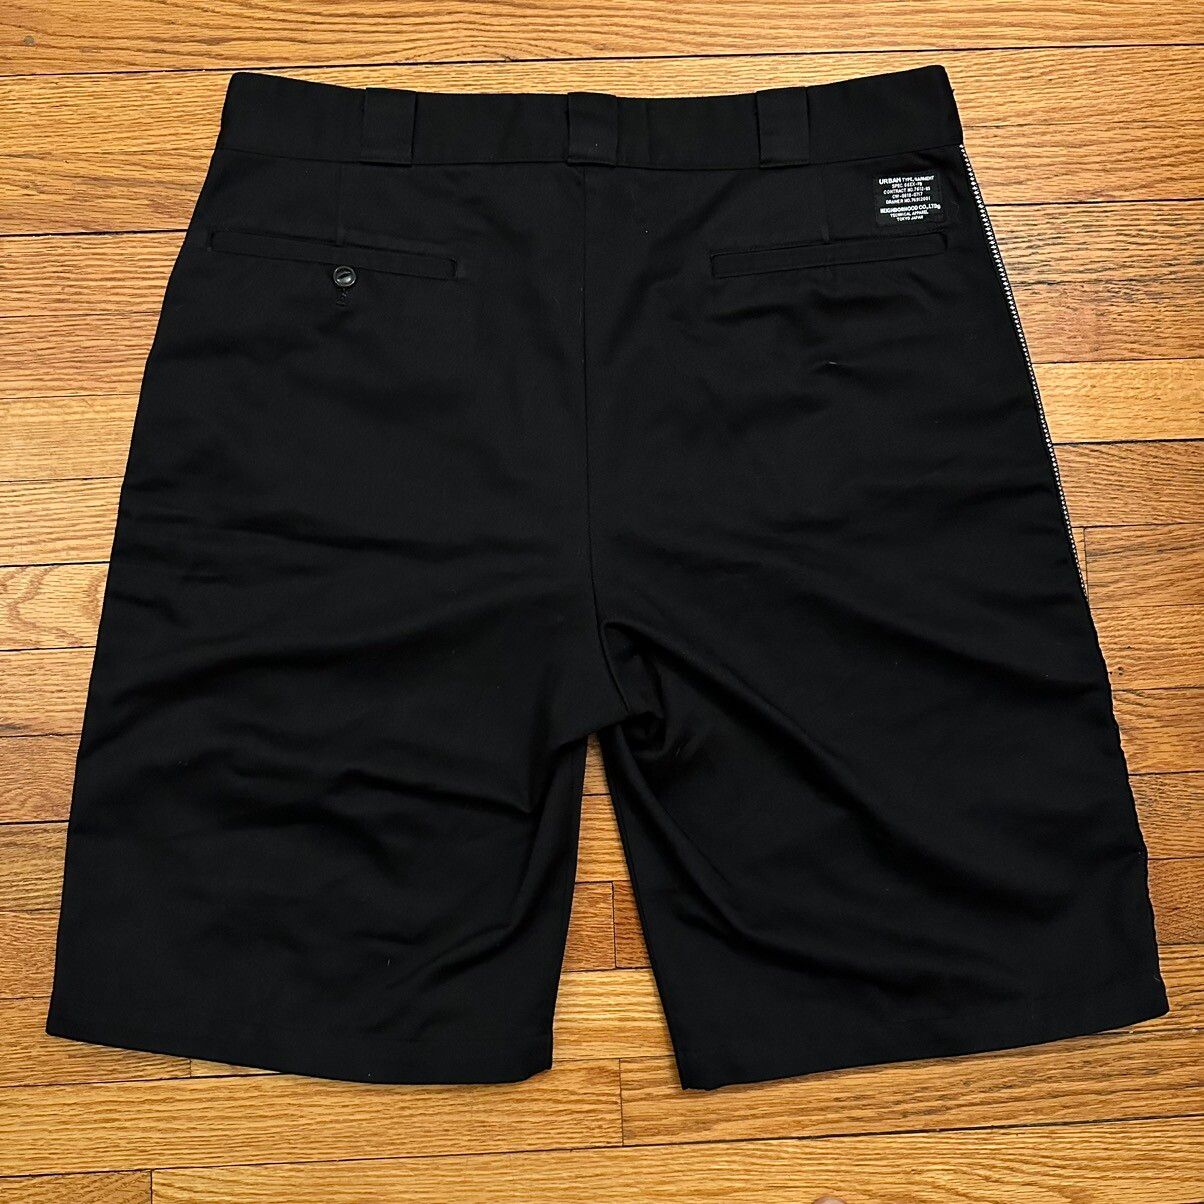 Neighborhood Neighborhood Japan Technical Apparel Black Chino Shorts Size US 36 / EU 52 - 2 Preview